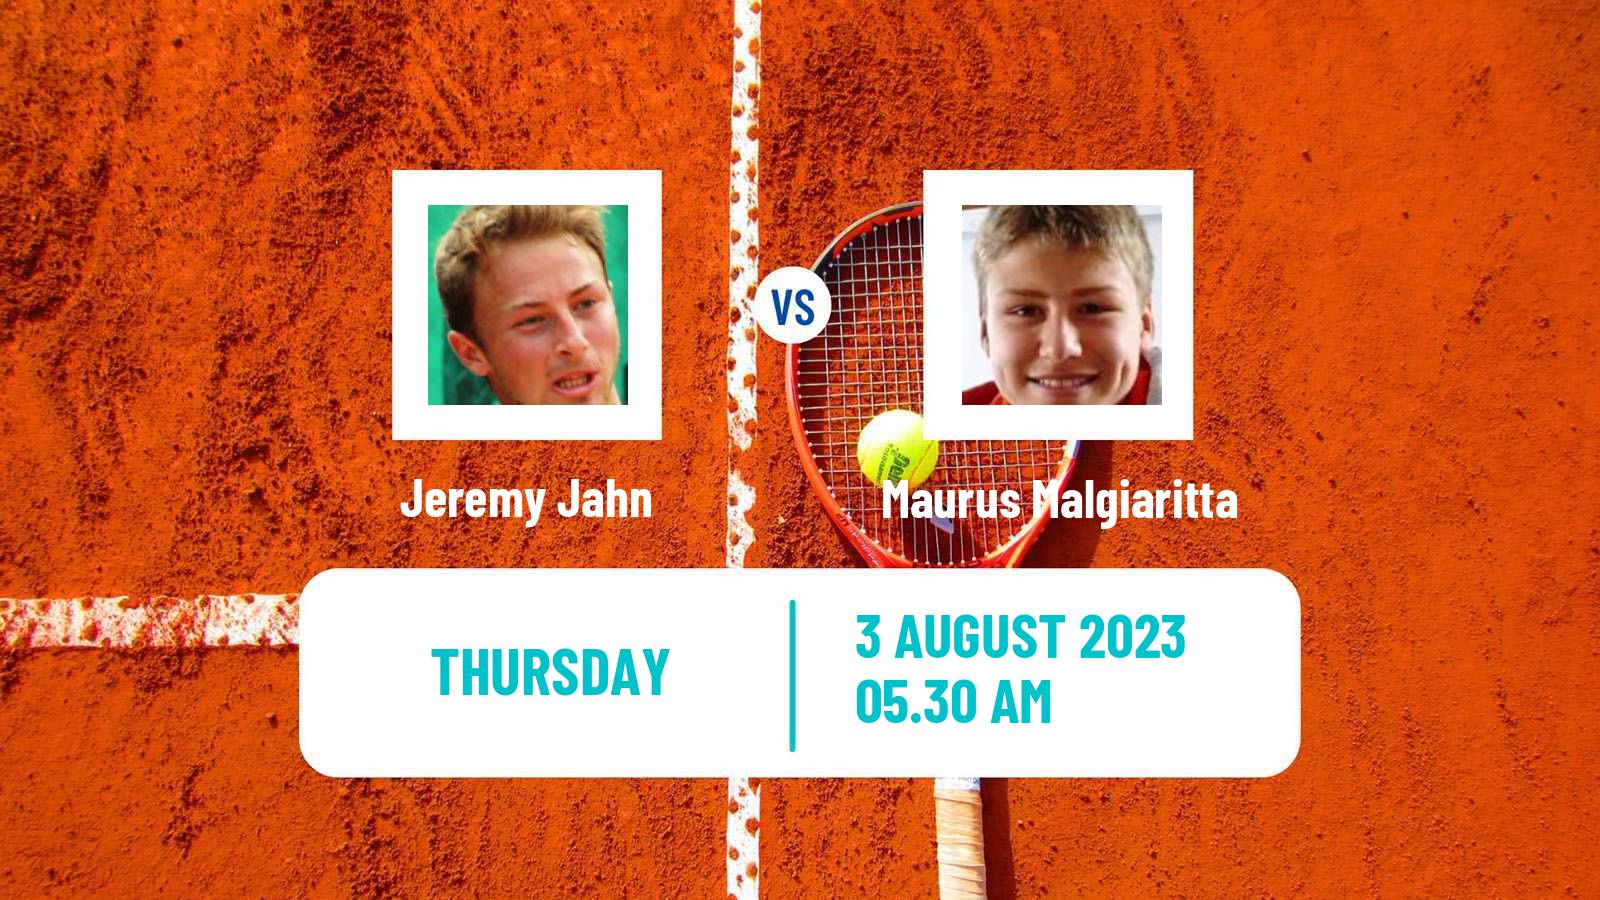 Tennis ITF M25 Bolzano Men Jeremy Jahn - Maurus Malgiaritta